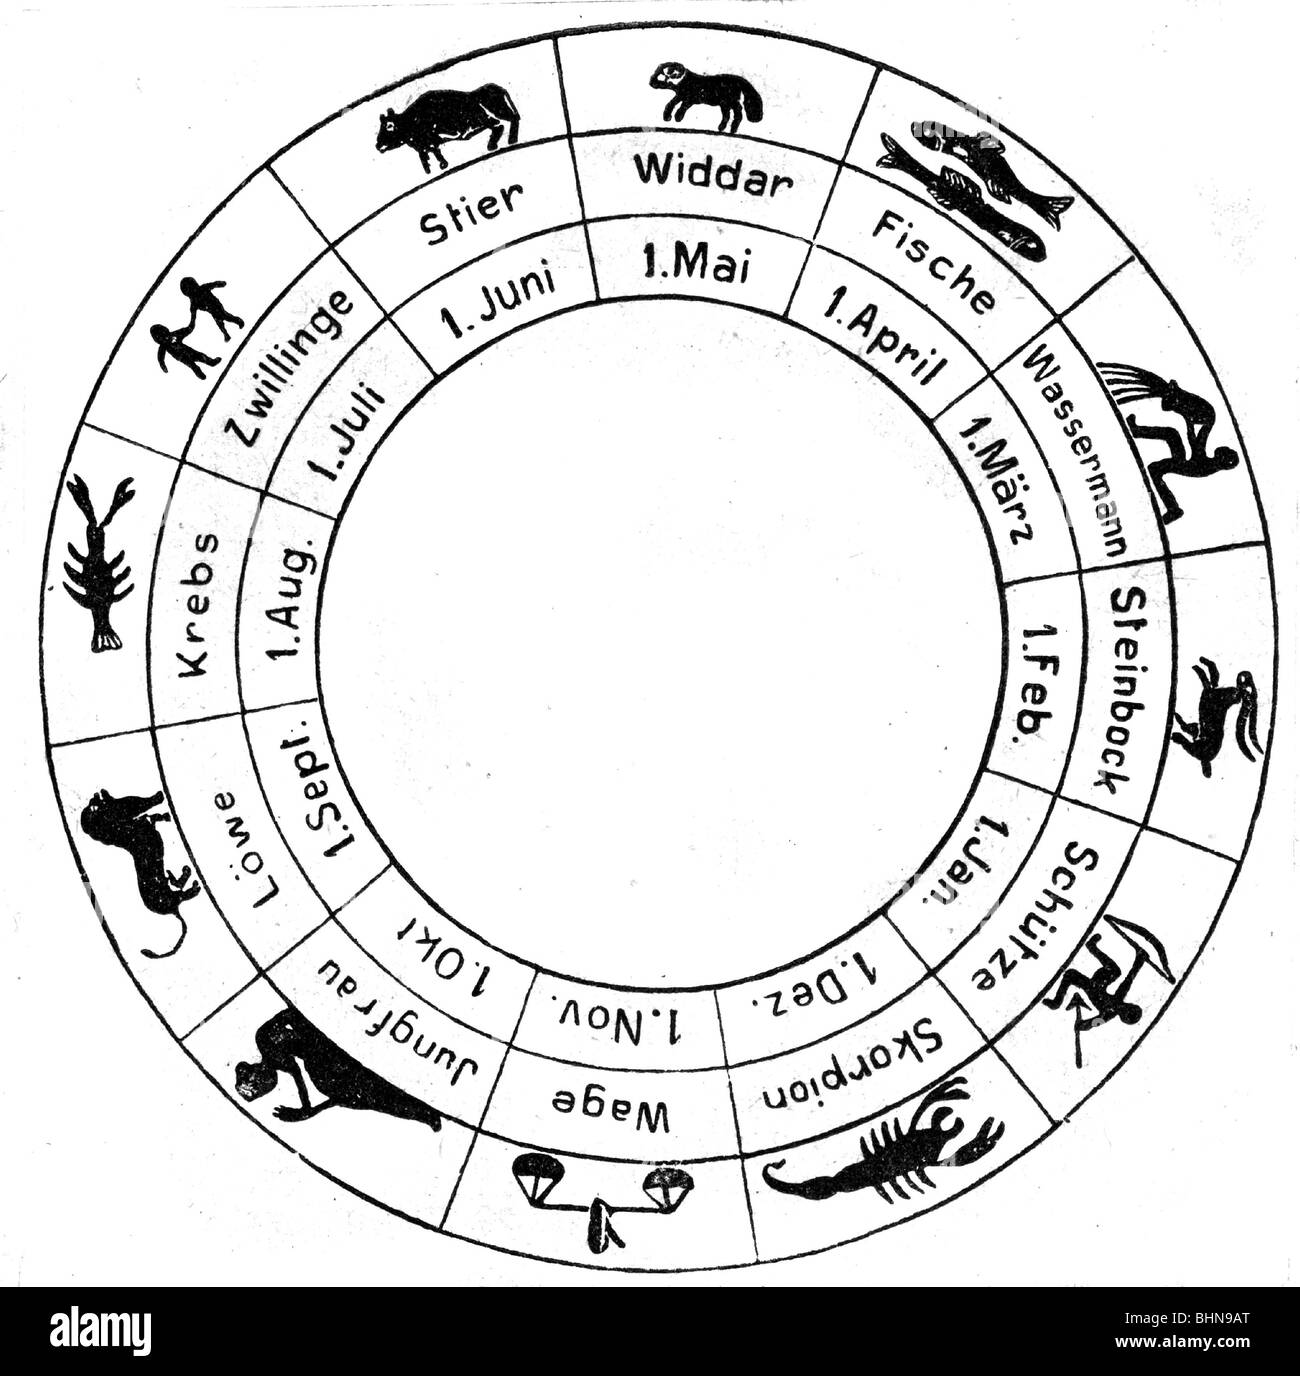 astrology, sign of zodiac, image, historic, historical, Stock Photo